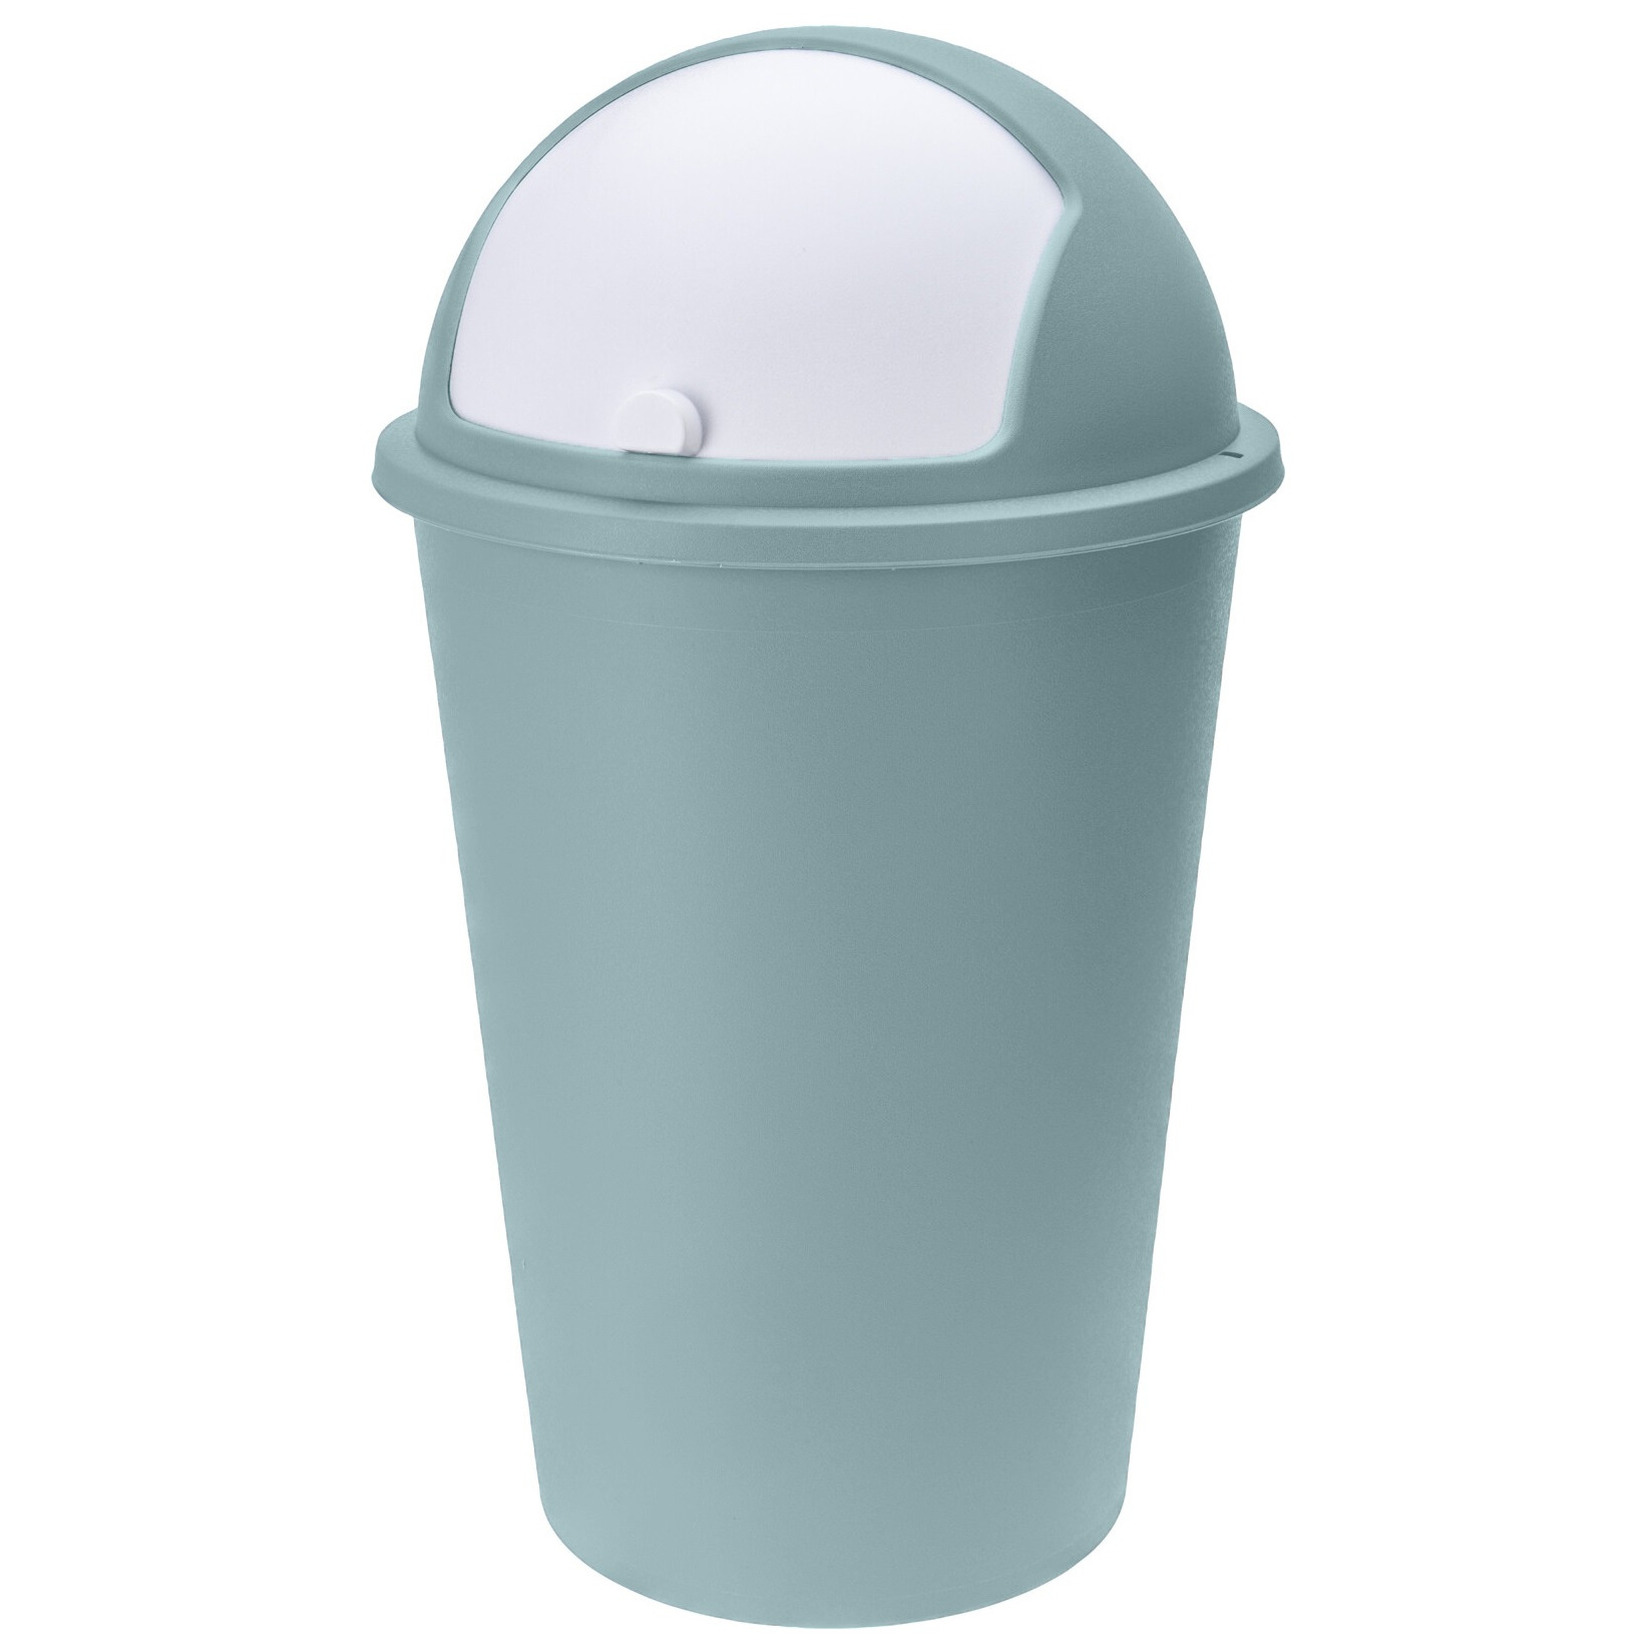 Vuilnisbak-afvalbak-prullenbak groen met deksel 50 liter